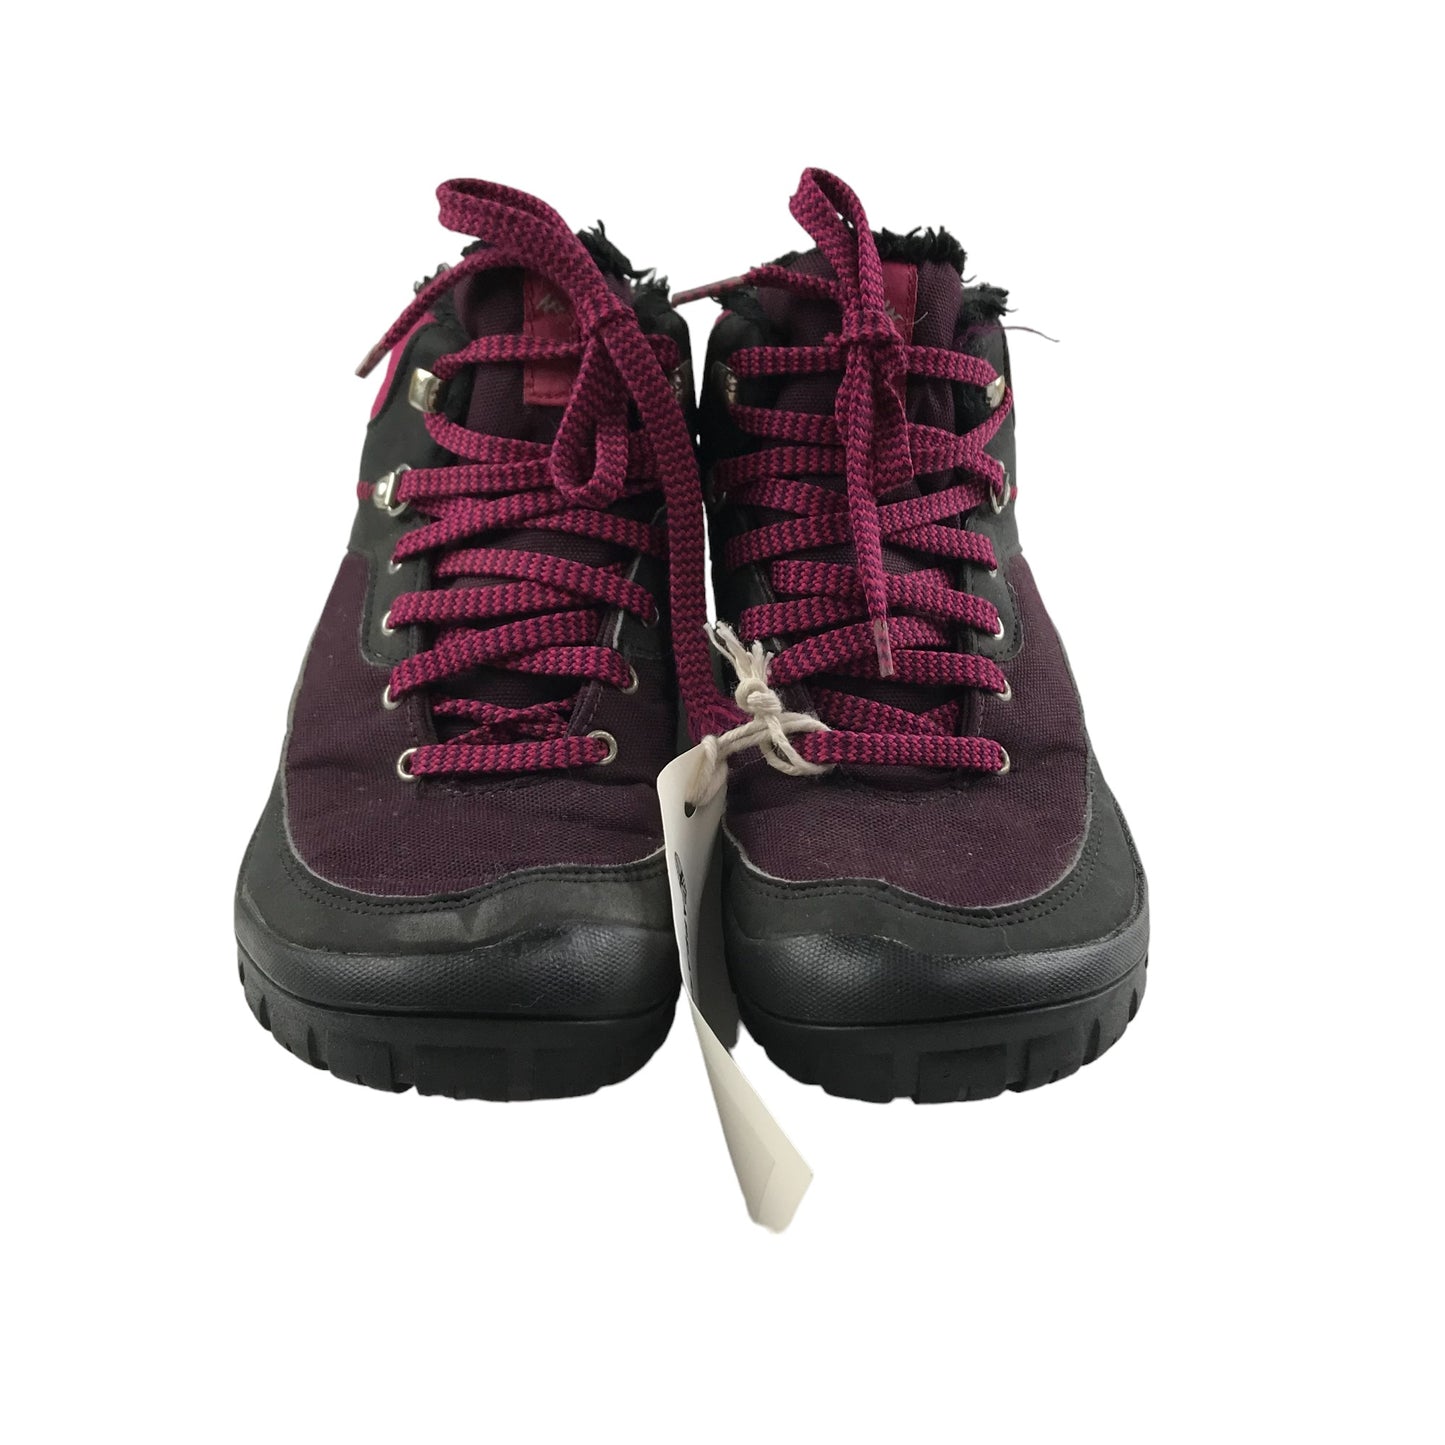 Decathlon Walking Boots Shoe Size 3 Purple Waterproof with Laces